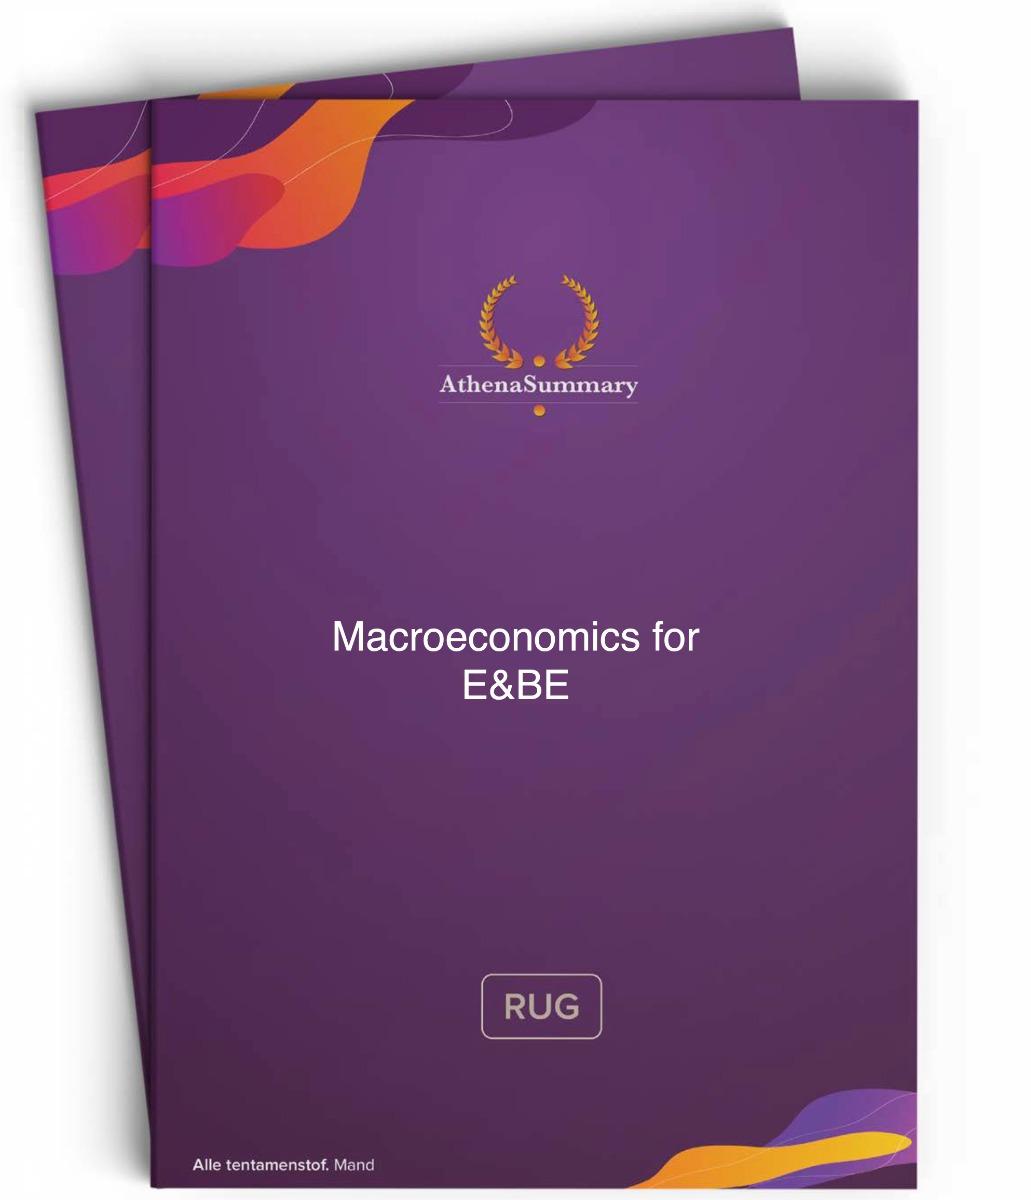 Literature Summary - Macroeconomics for E&BE